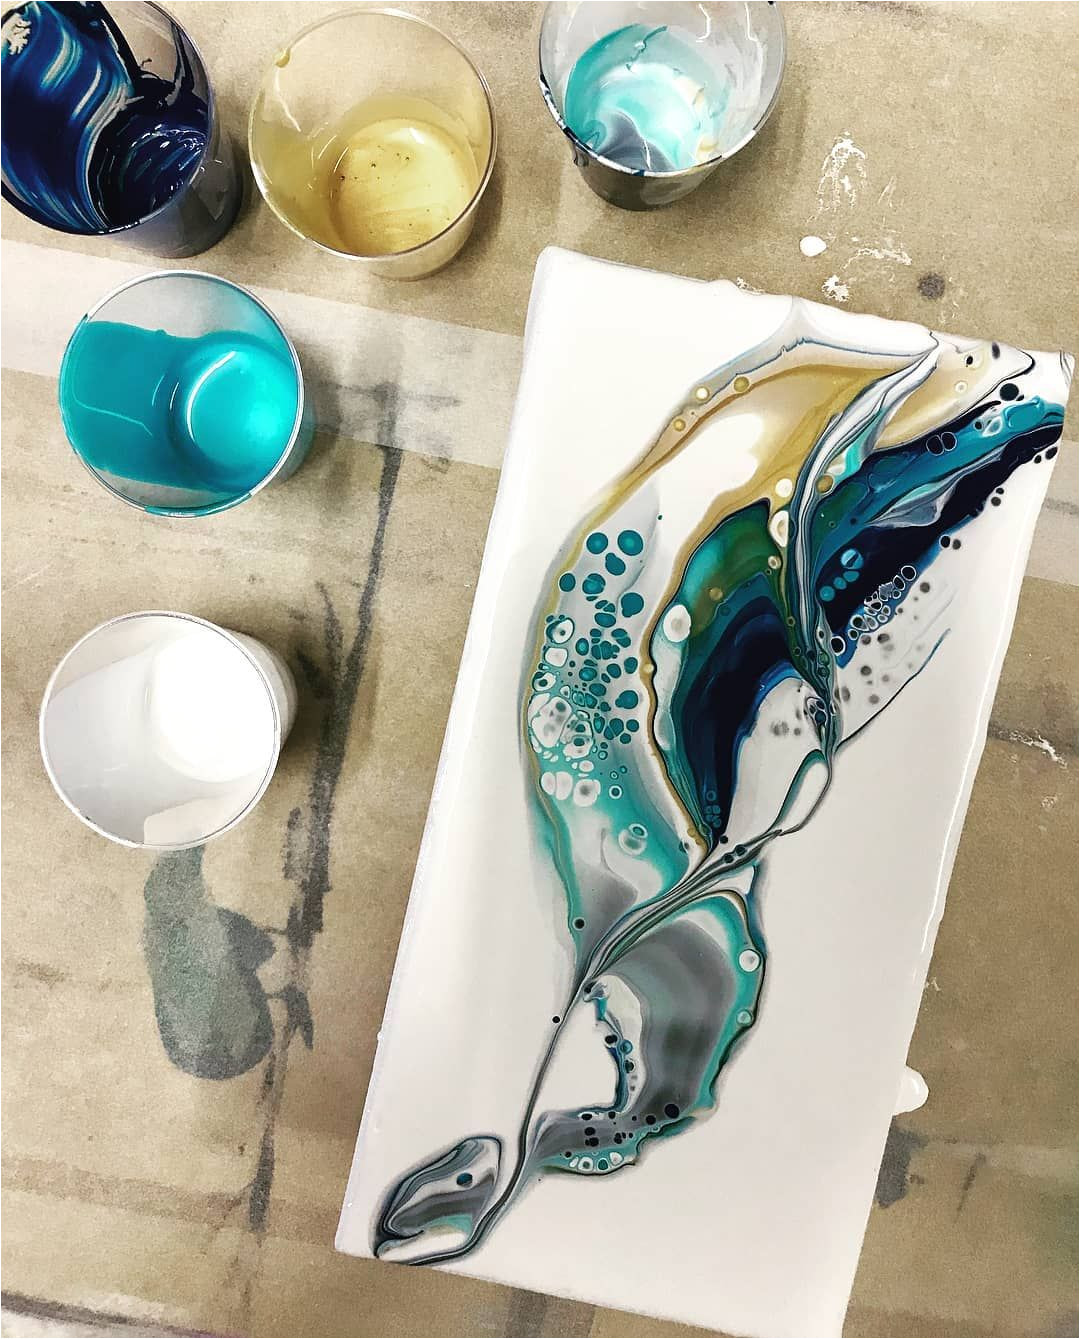 melted crayon art using a hot glue gun in 2019 paint pouring acrylic pouring acrylic pouring art art